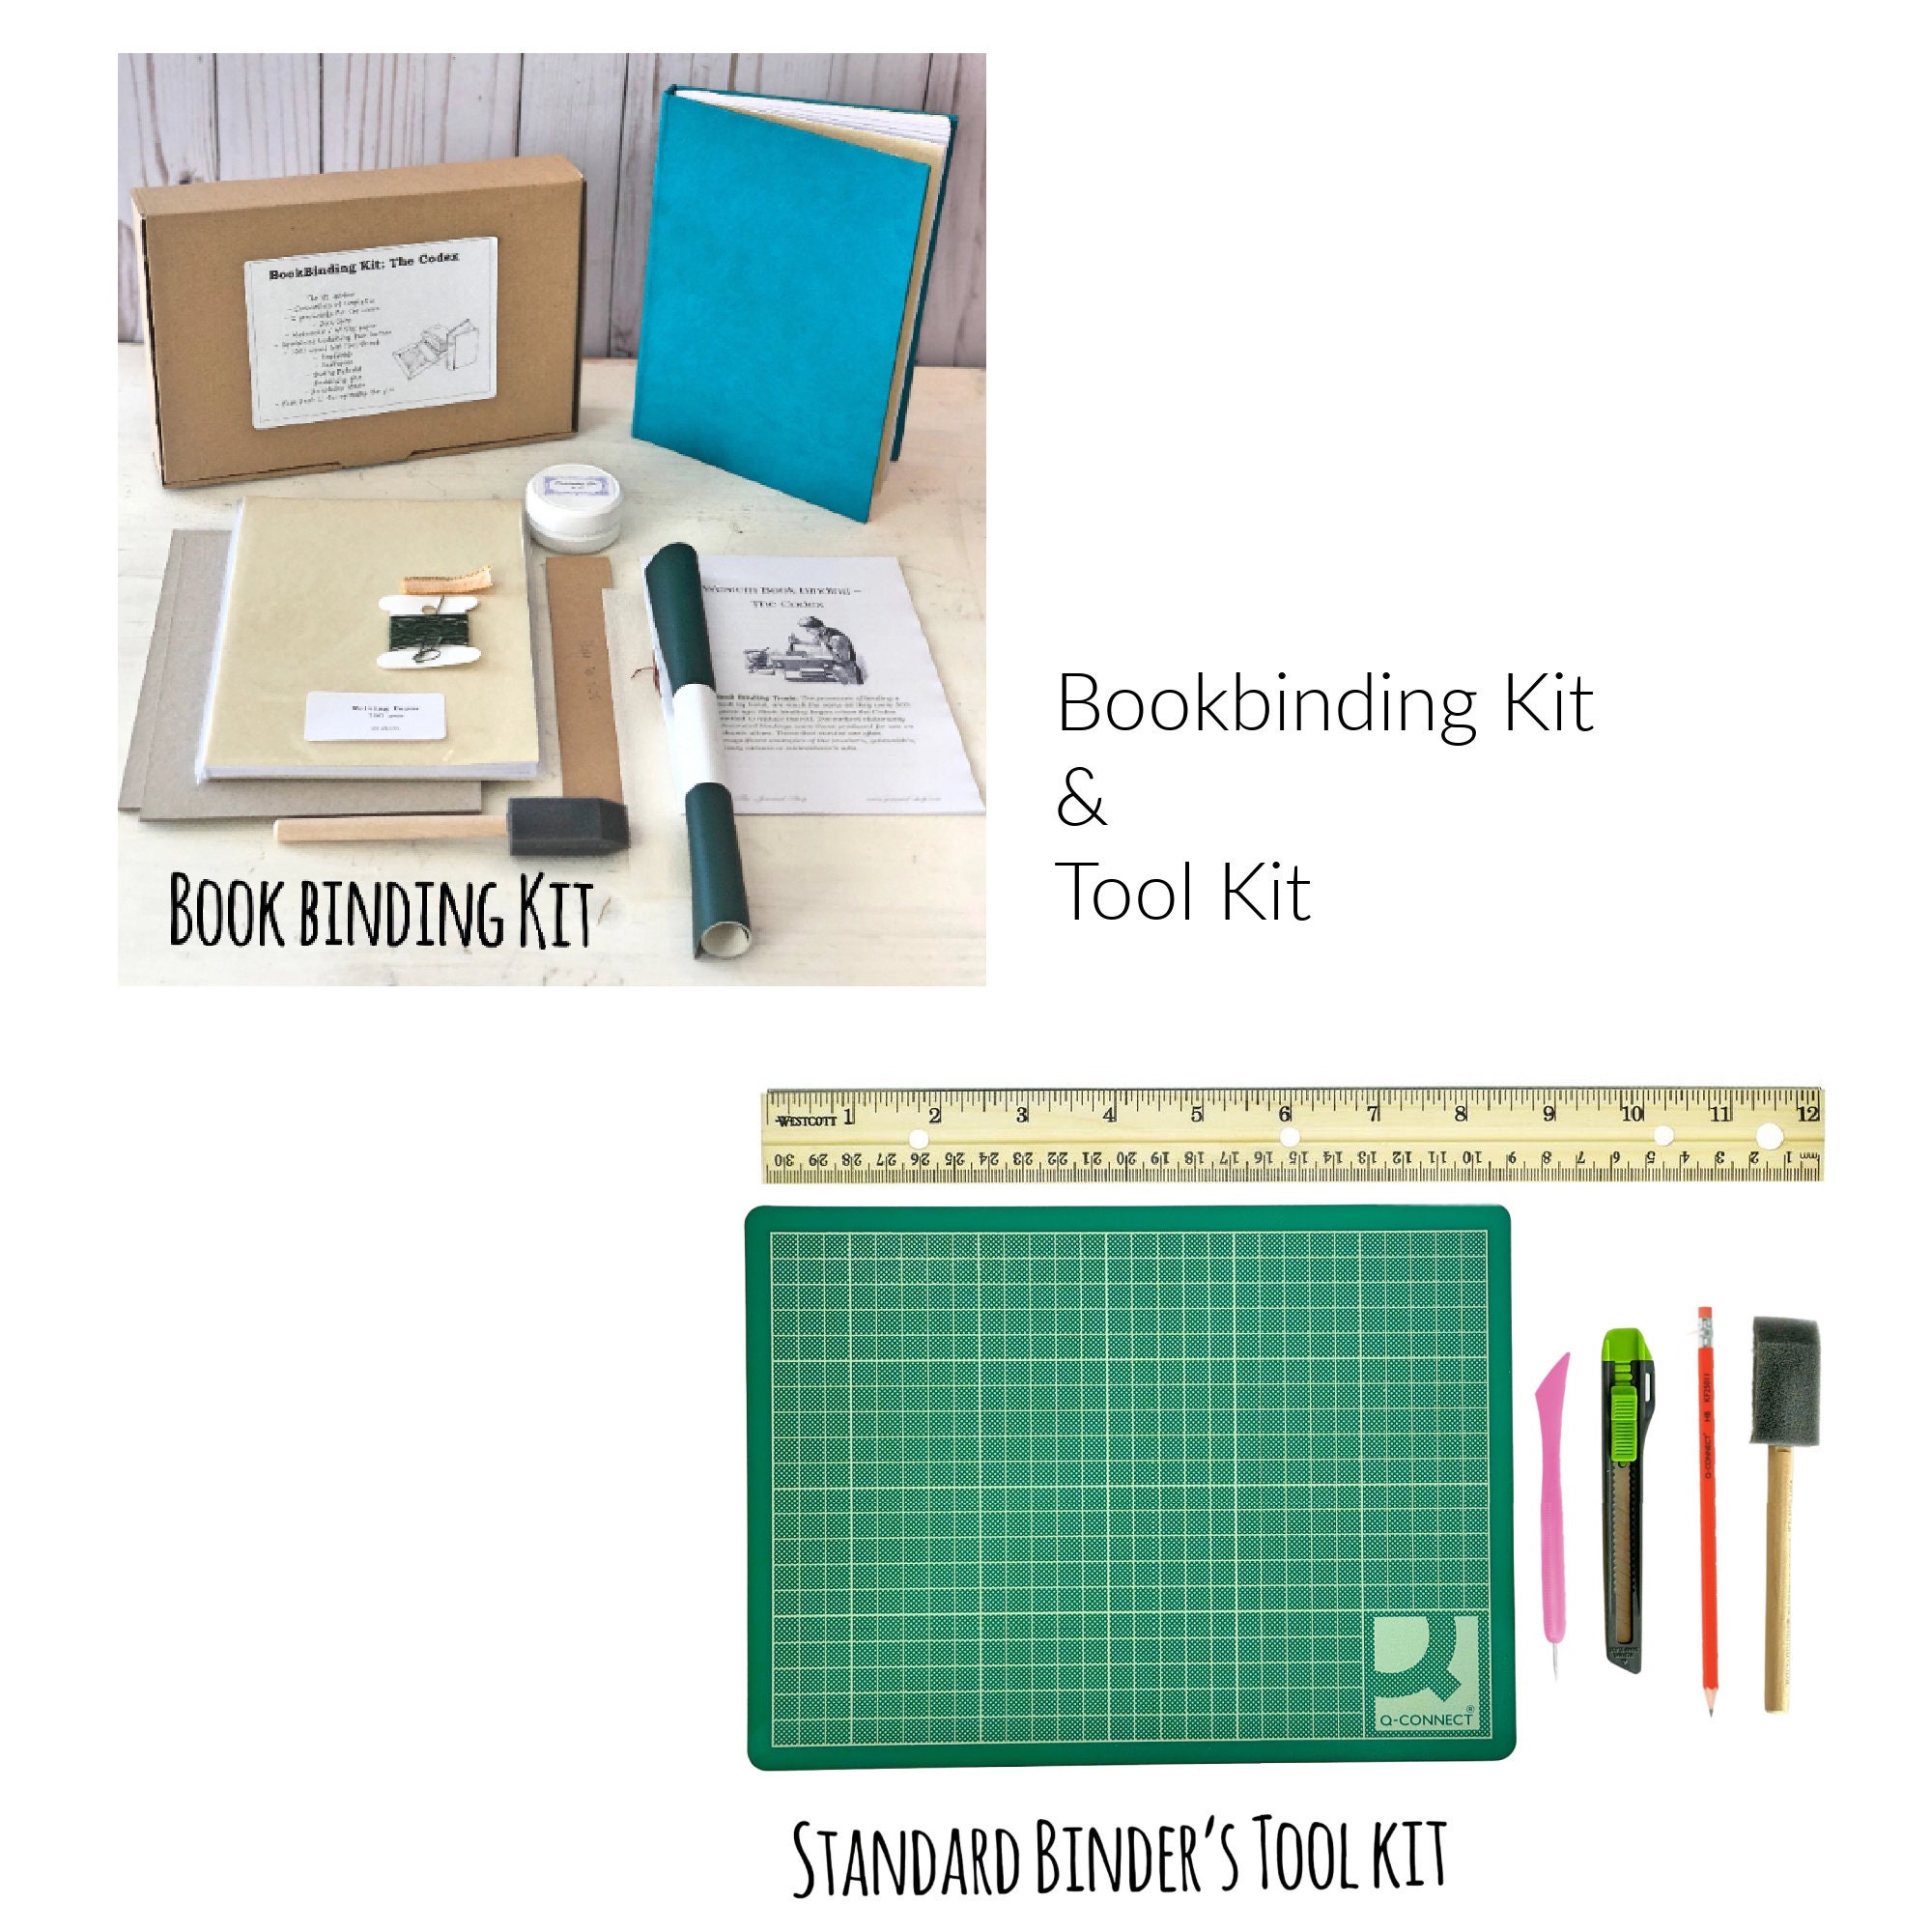 Book Binding Tutorial: Glues - Tips, Techniques, Types & Recipes -  iBookBinding - Bookbinding Tutorials & Resources